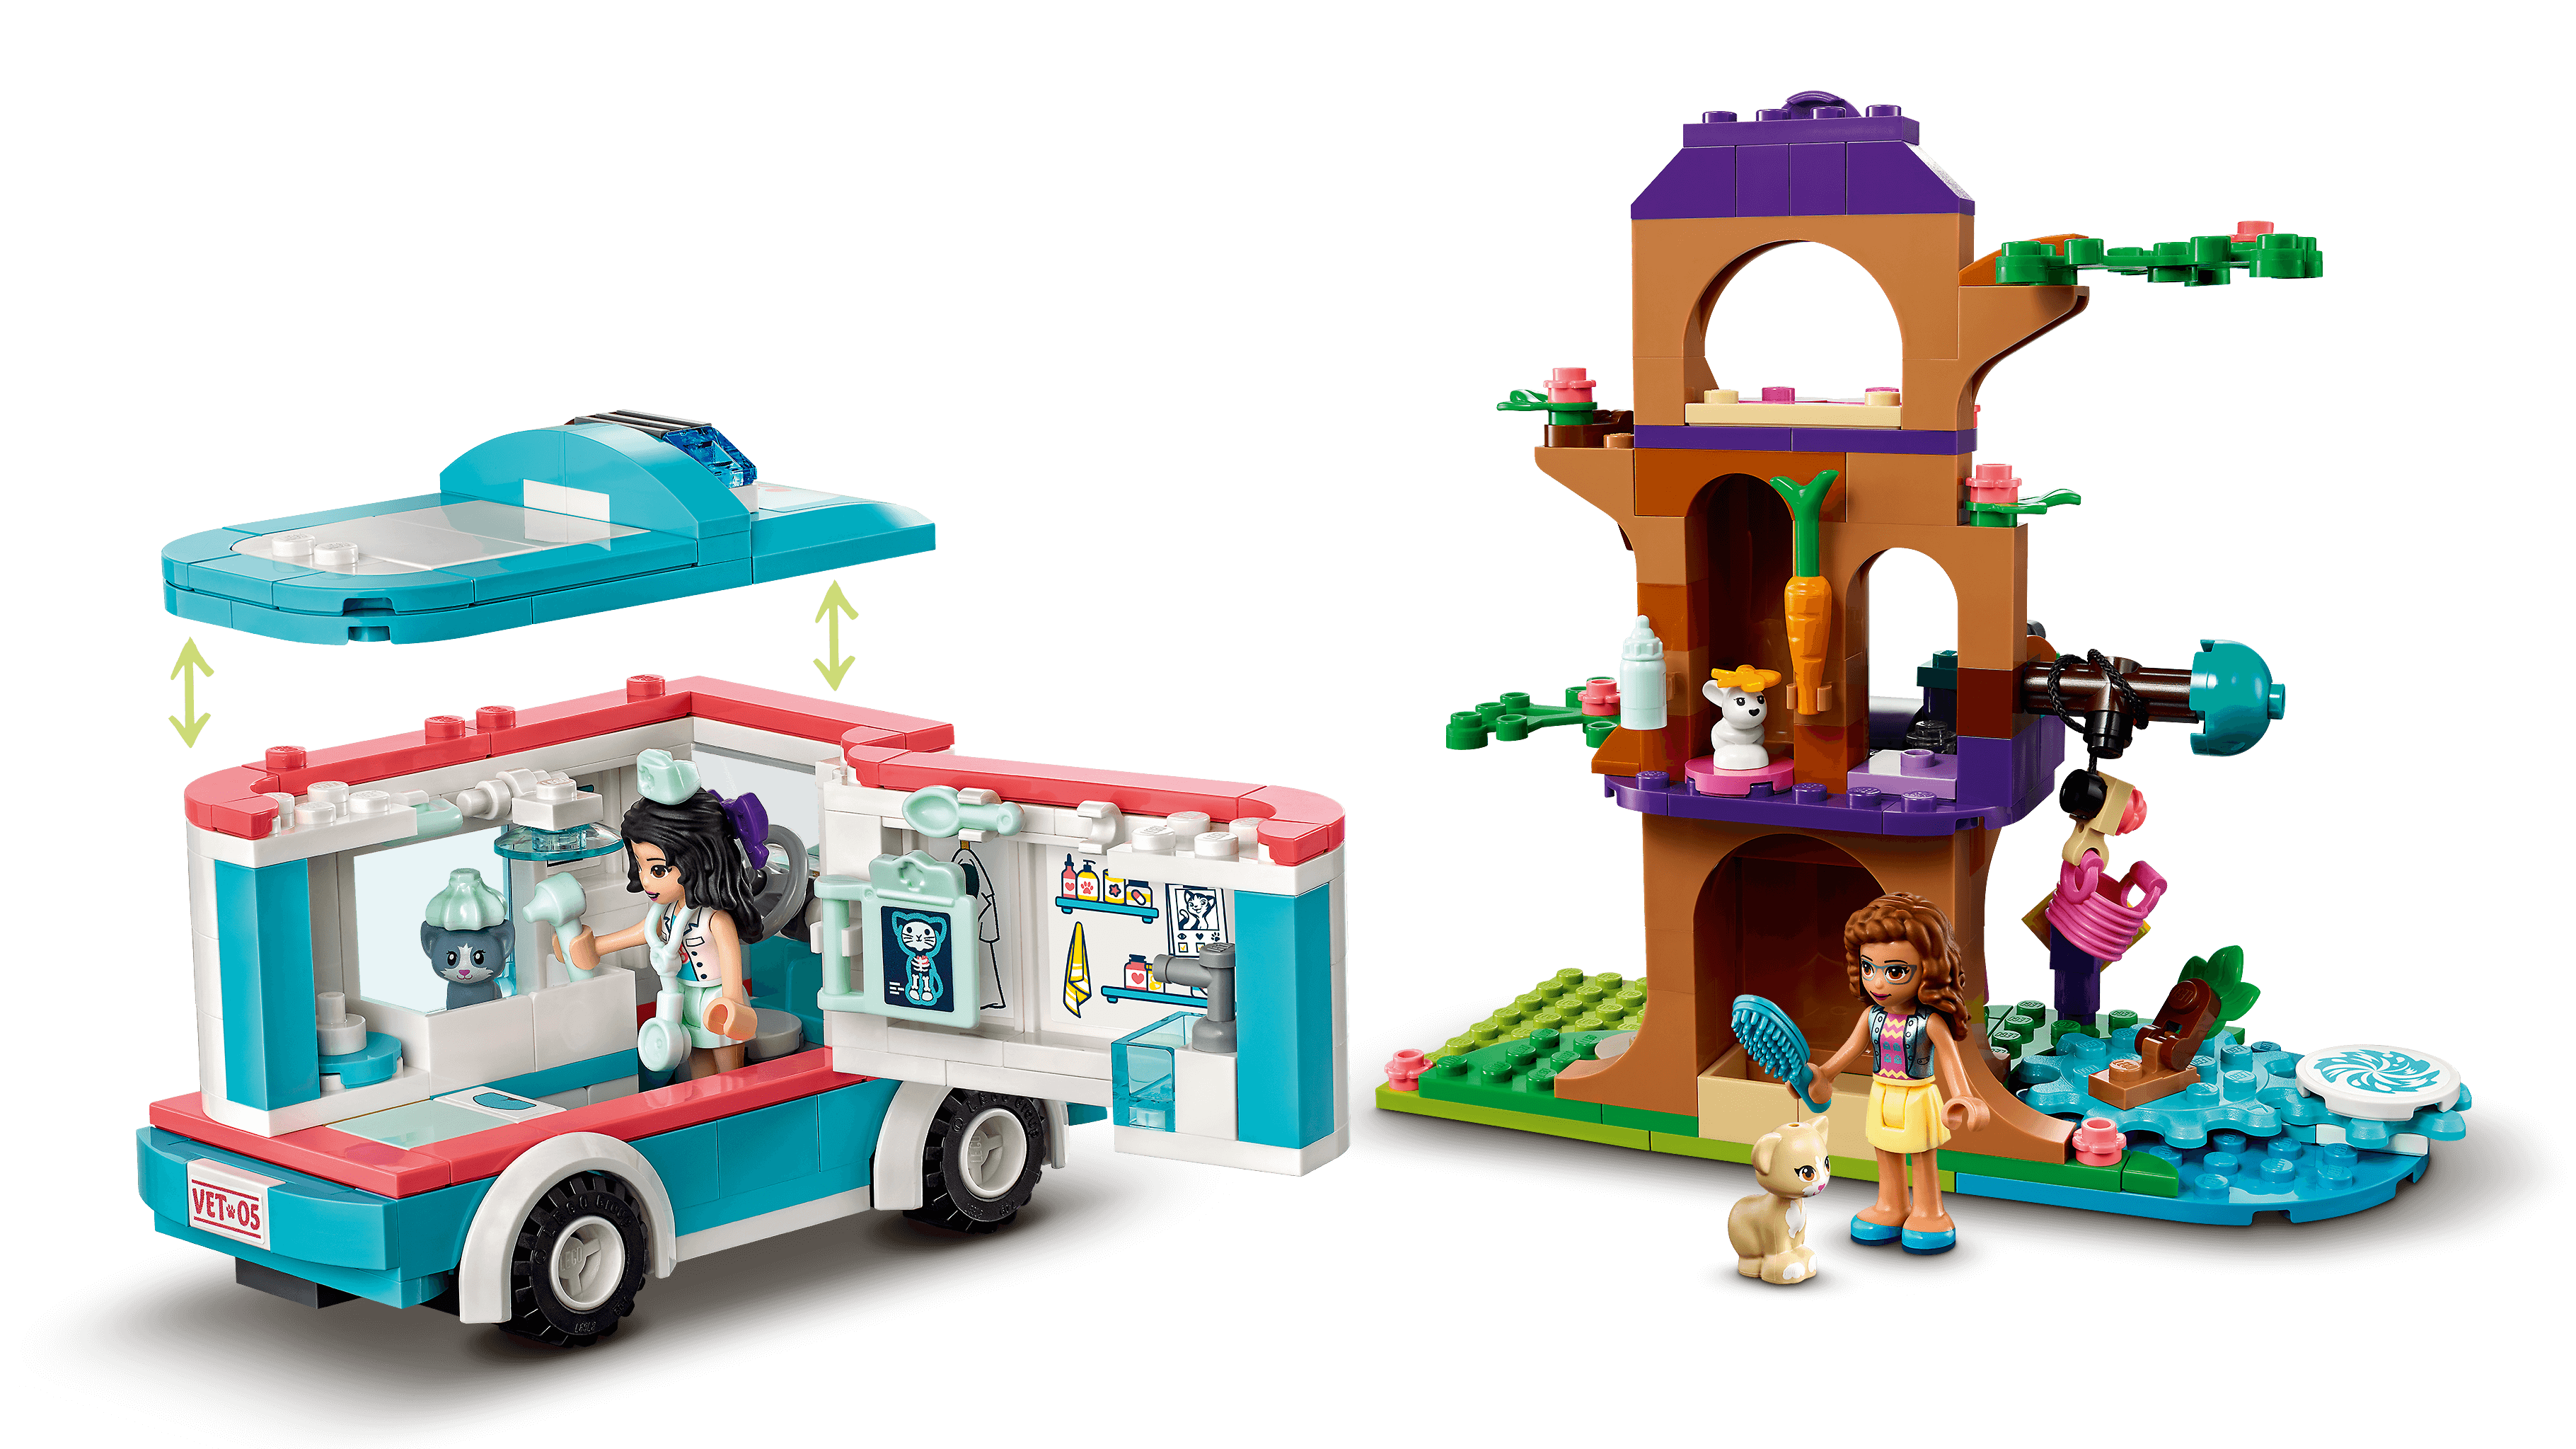 Lego 41445 Friends Vet Clinic Ambulance Animal Rescue Playset